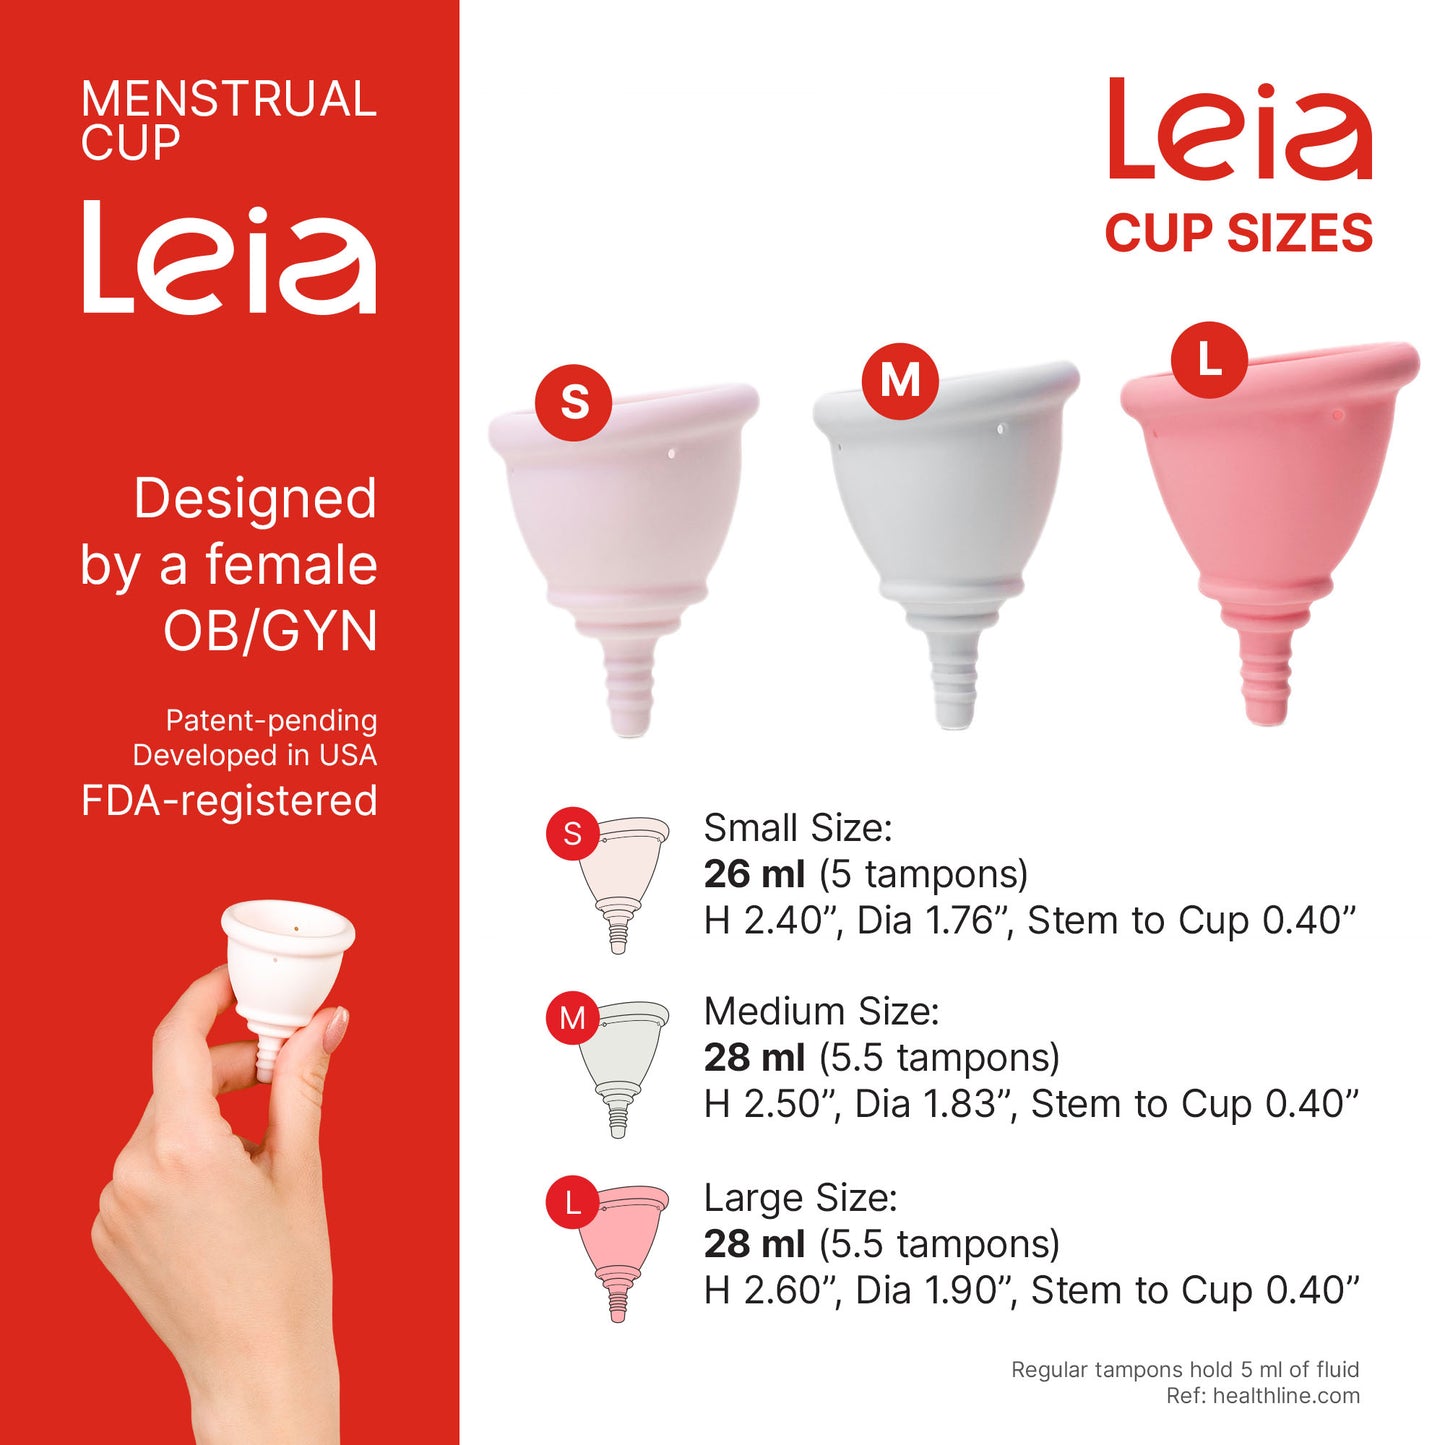 OB/GYN Designed LEIA Menstrual Cup — Size S